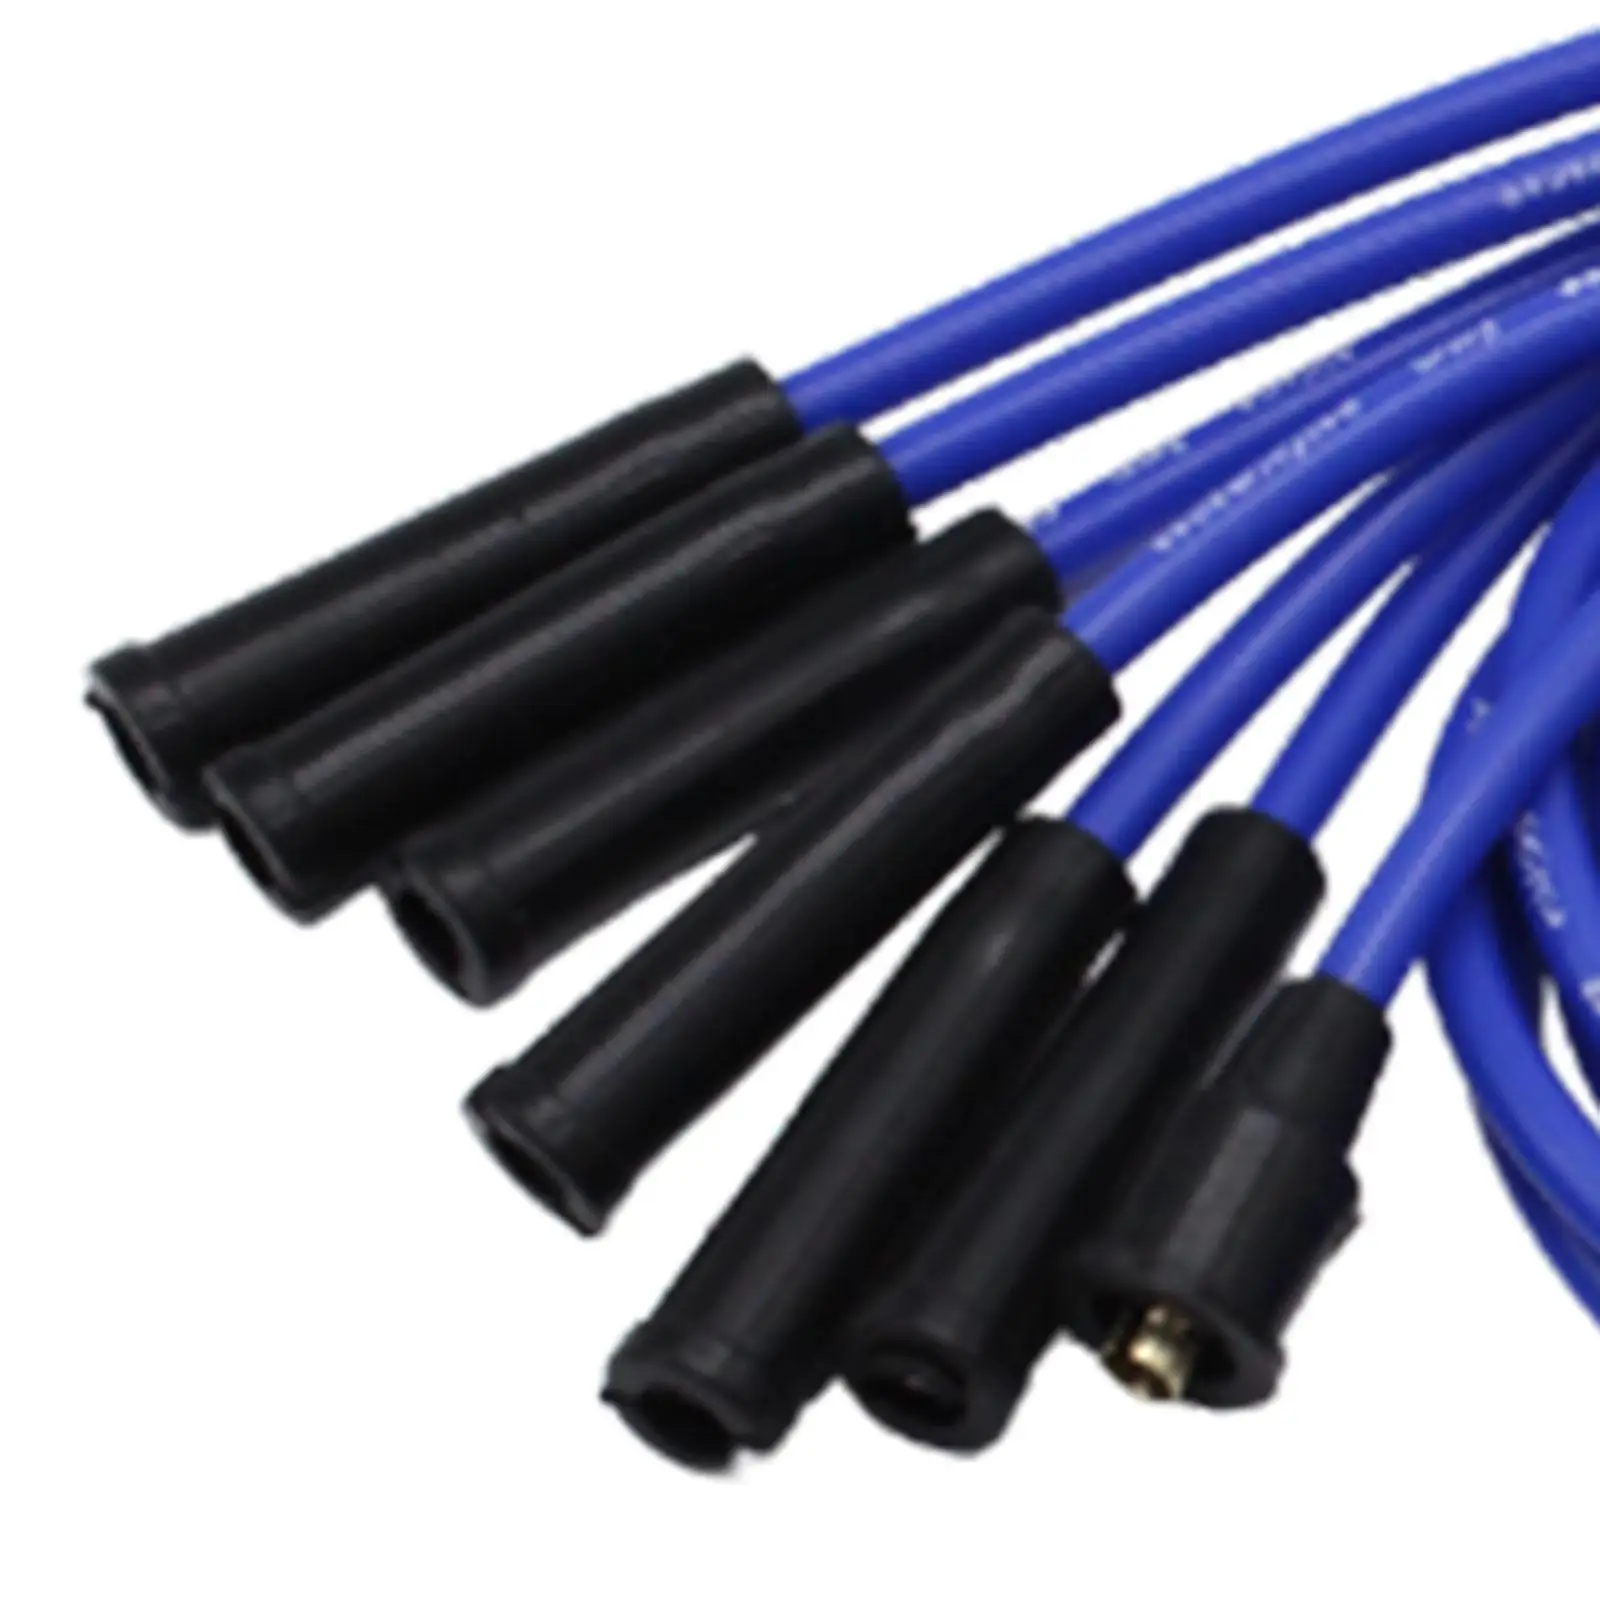 8mm HT Leads Blue Spark Plug Wires Set for 6 Cylinder Durable Premium